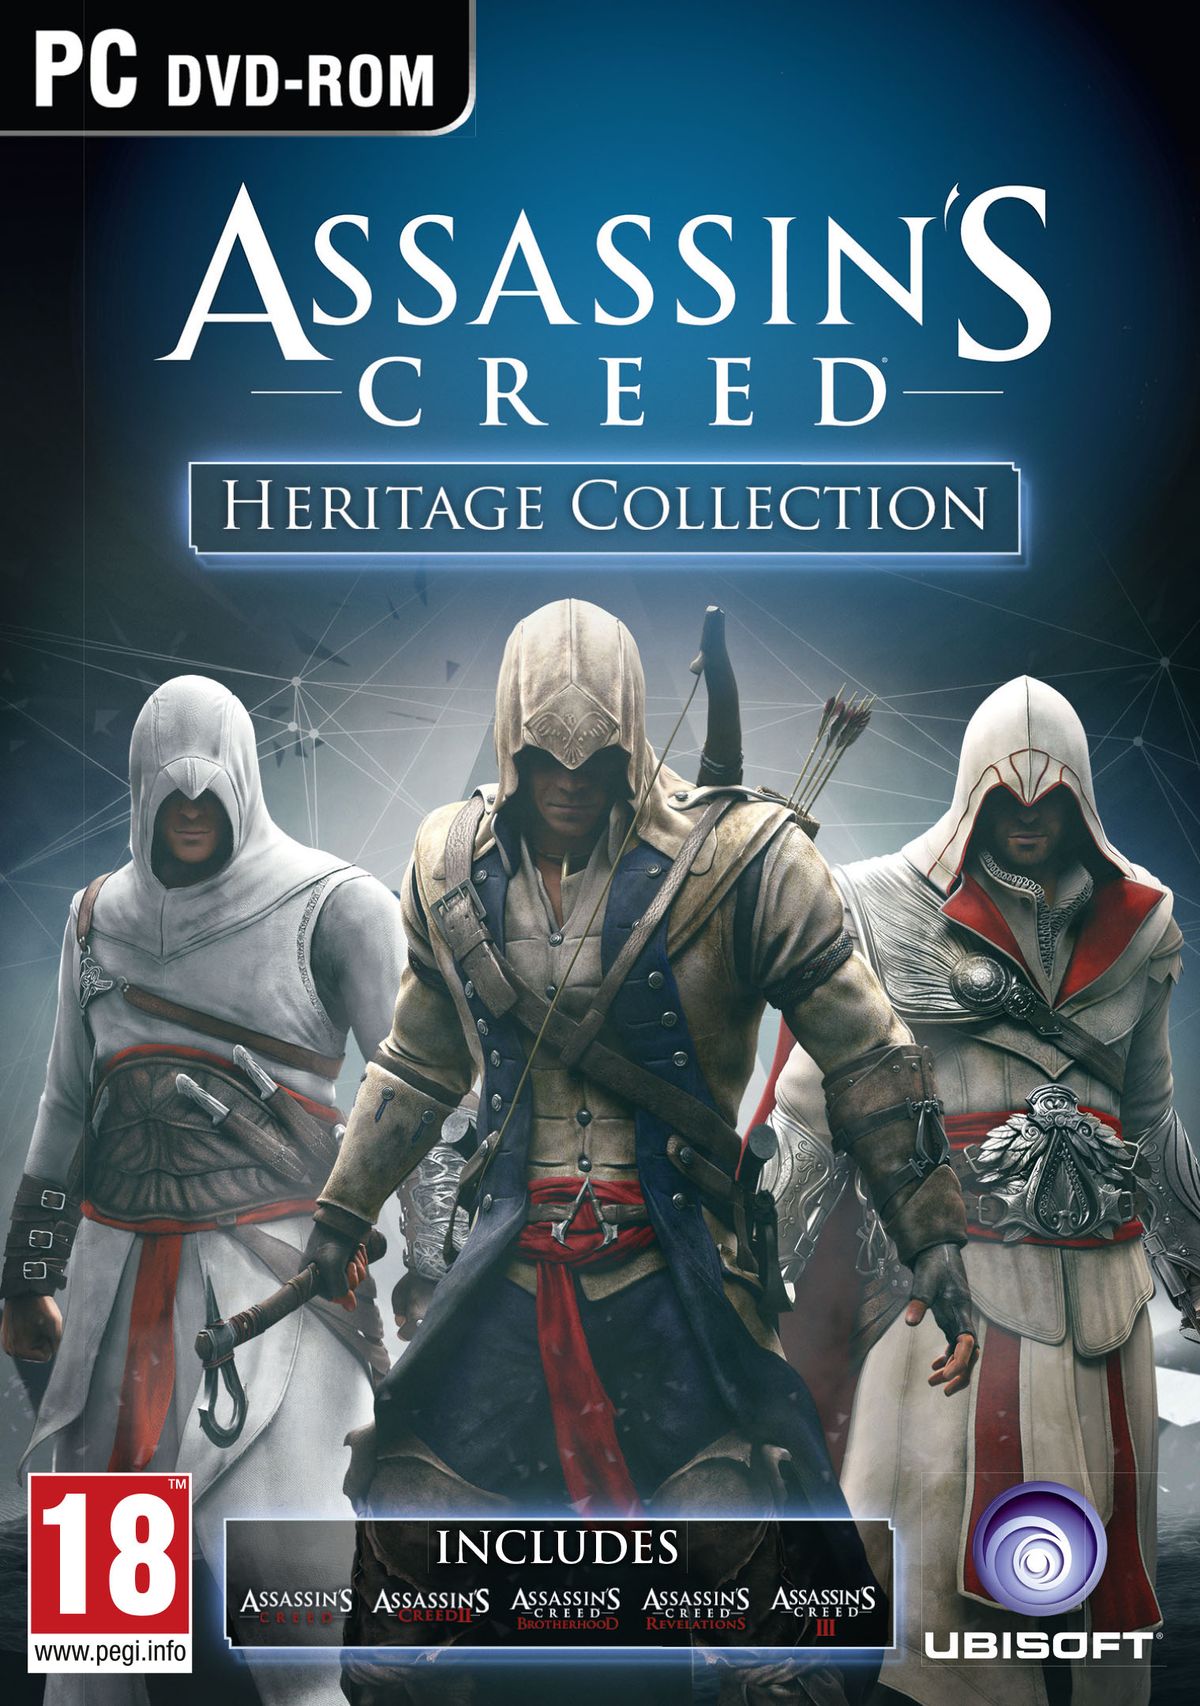 Assassin's Creed Heritage Collection bundles five games | GamesRadar+